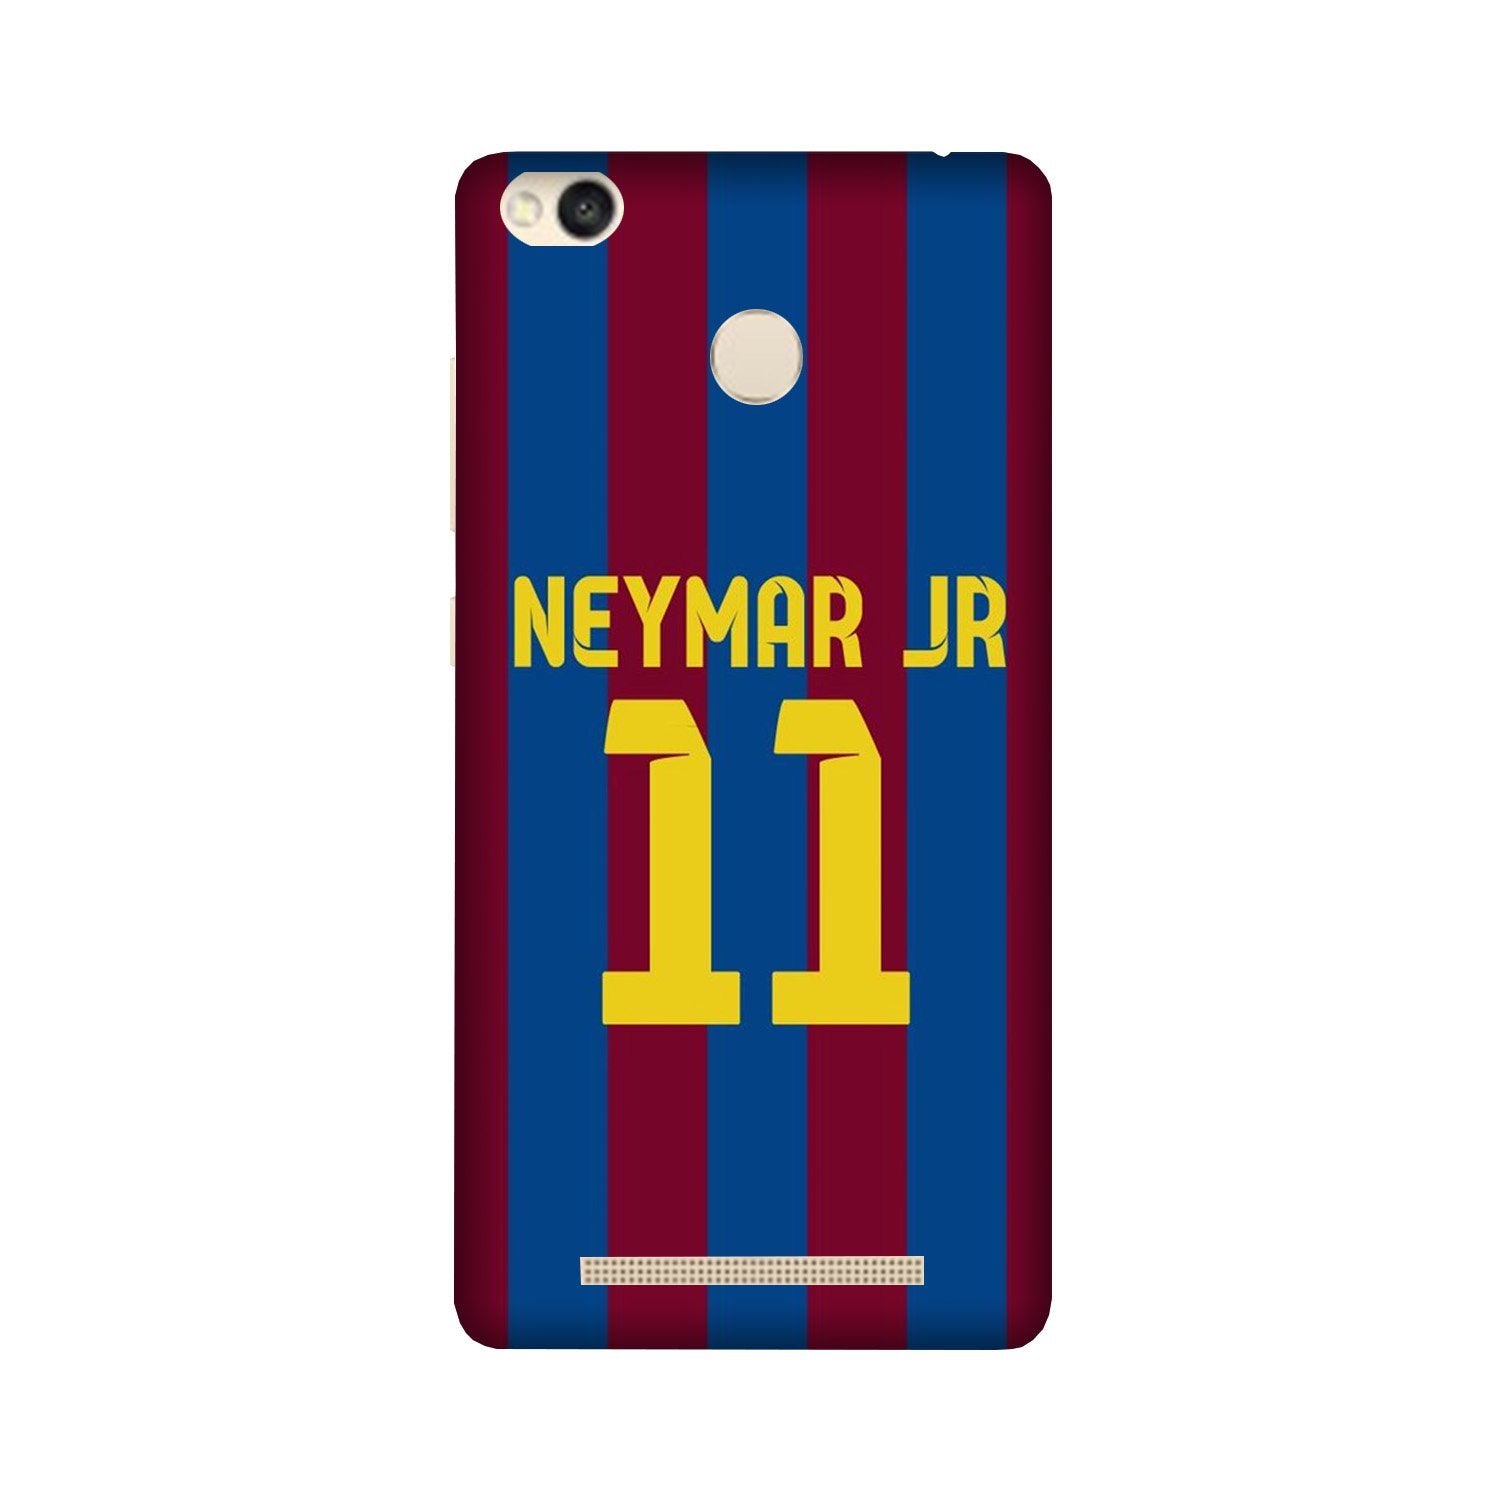 Neymar Jr Case for Redmi 3S Prime(Design - 162)